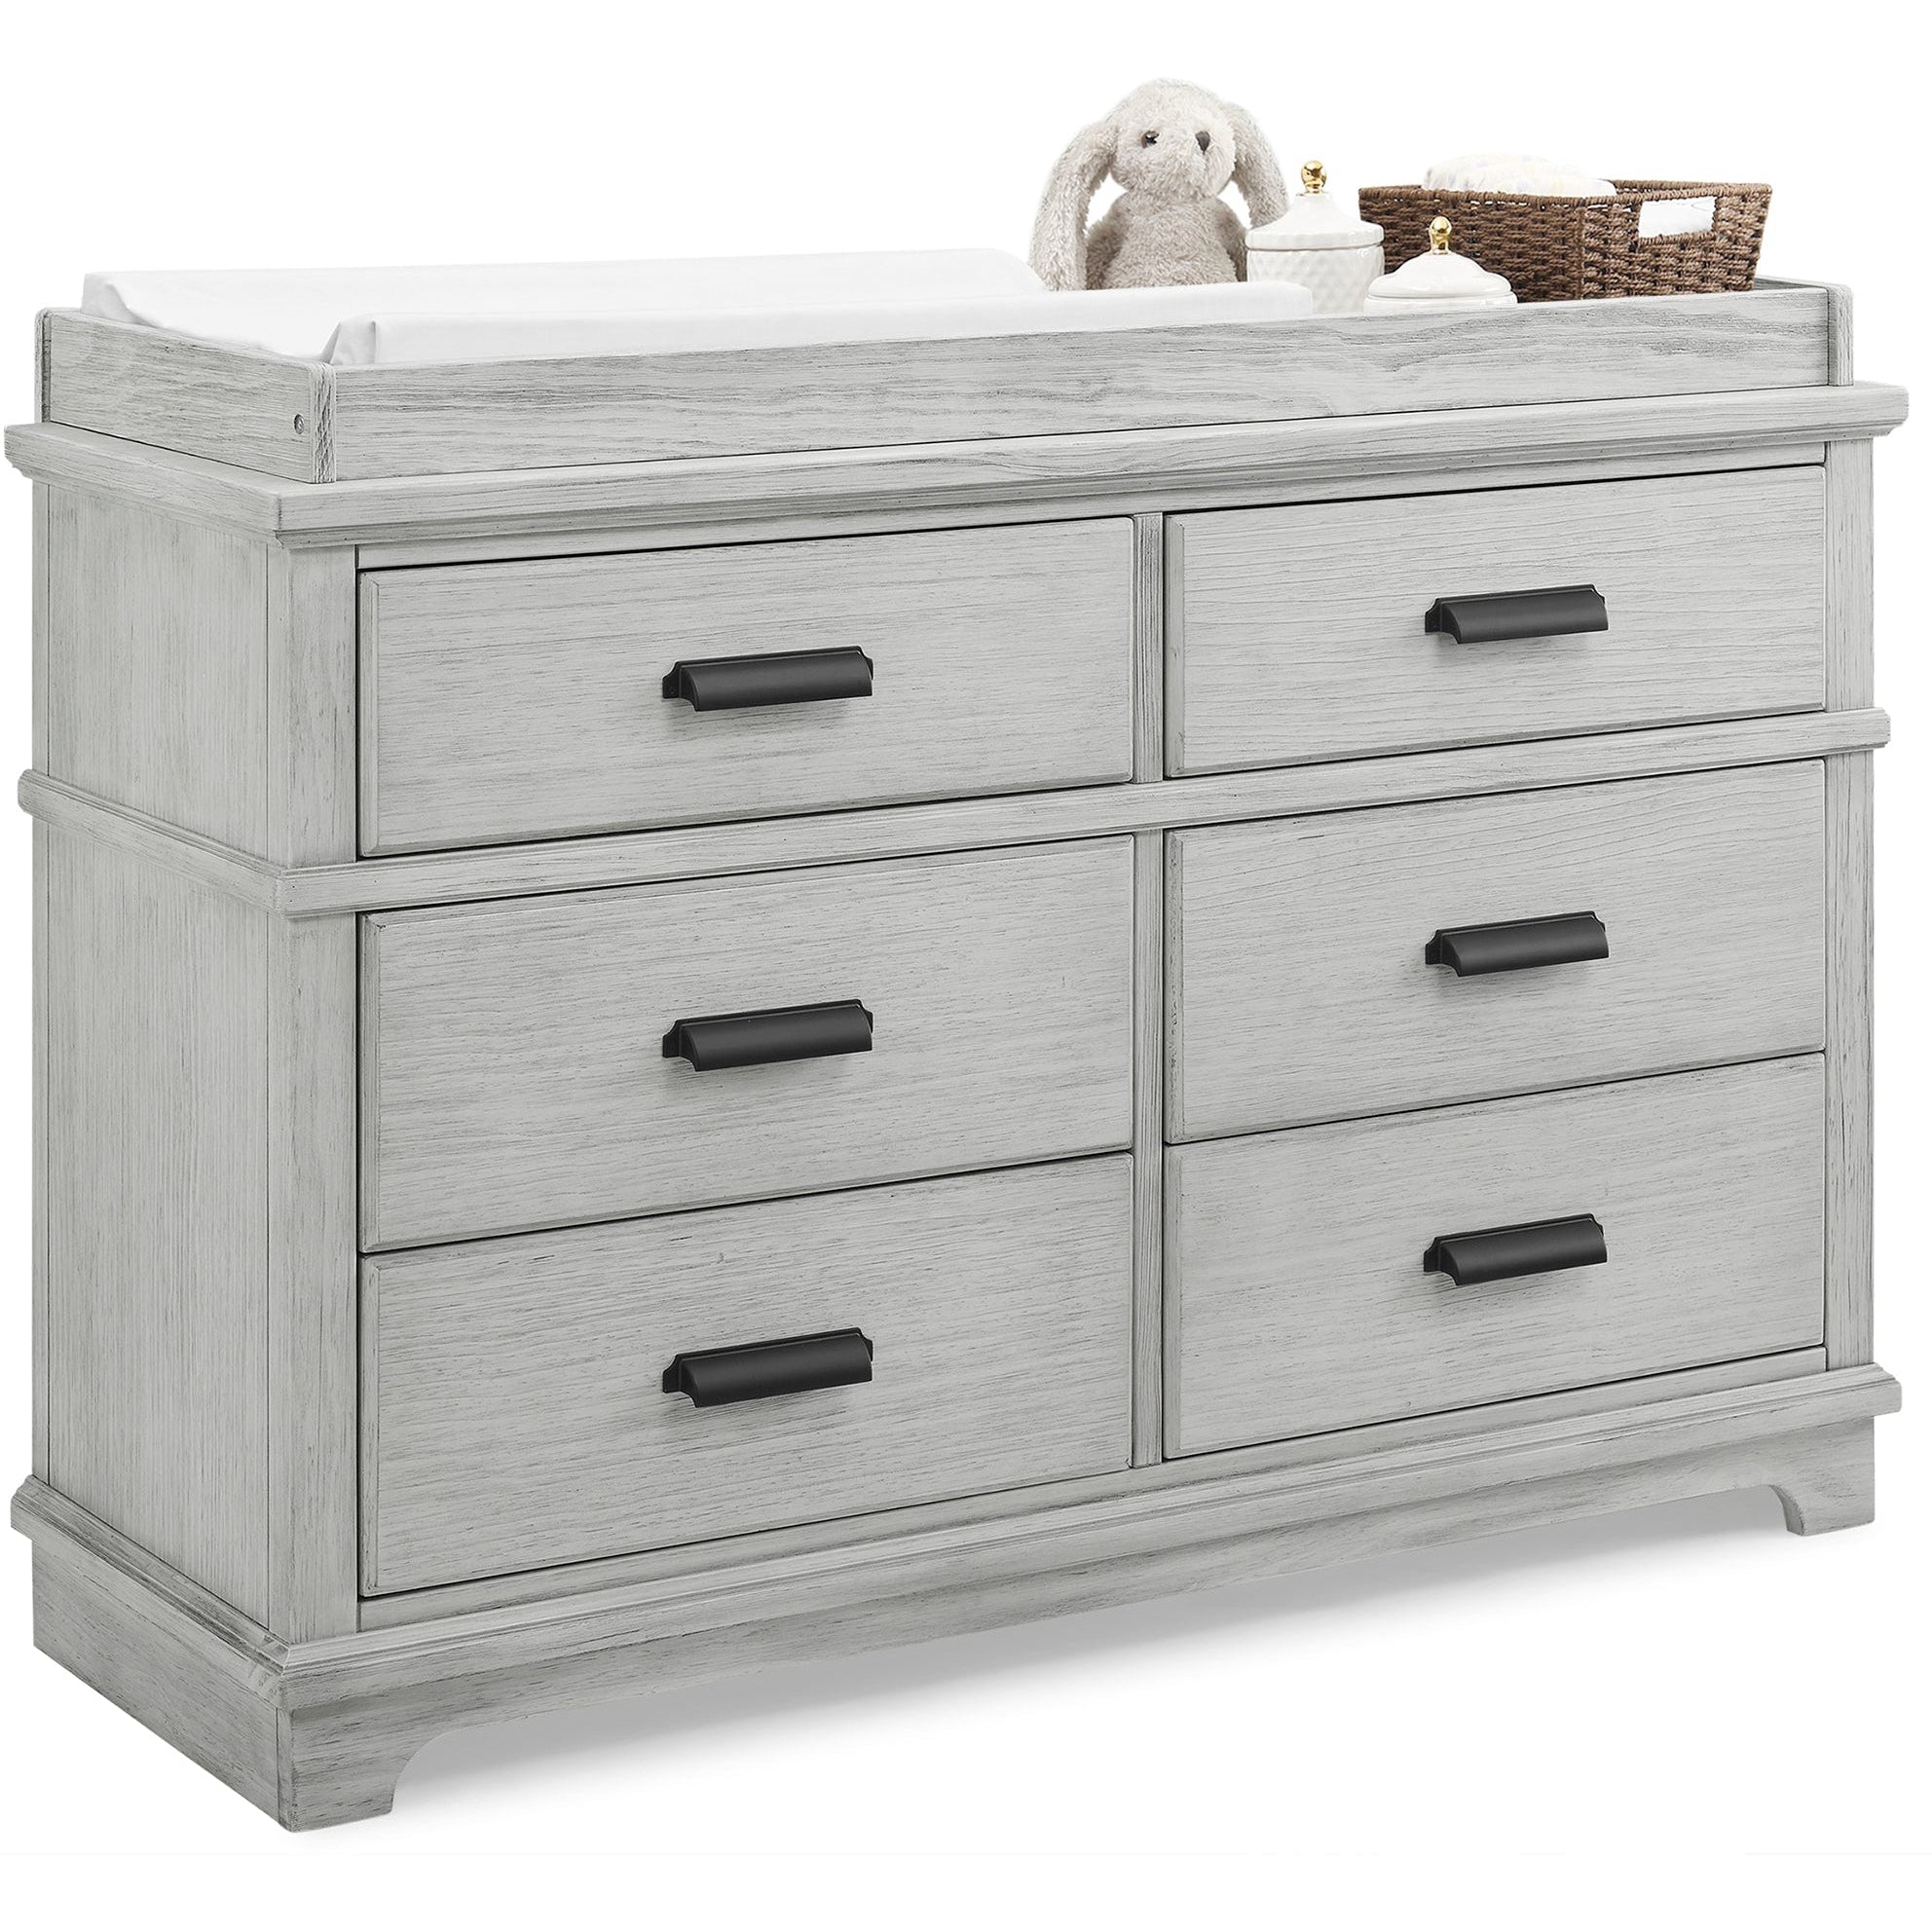 Delta Children Asher 6-Drawer Dresser with Changing Top